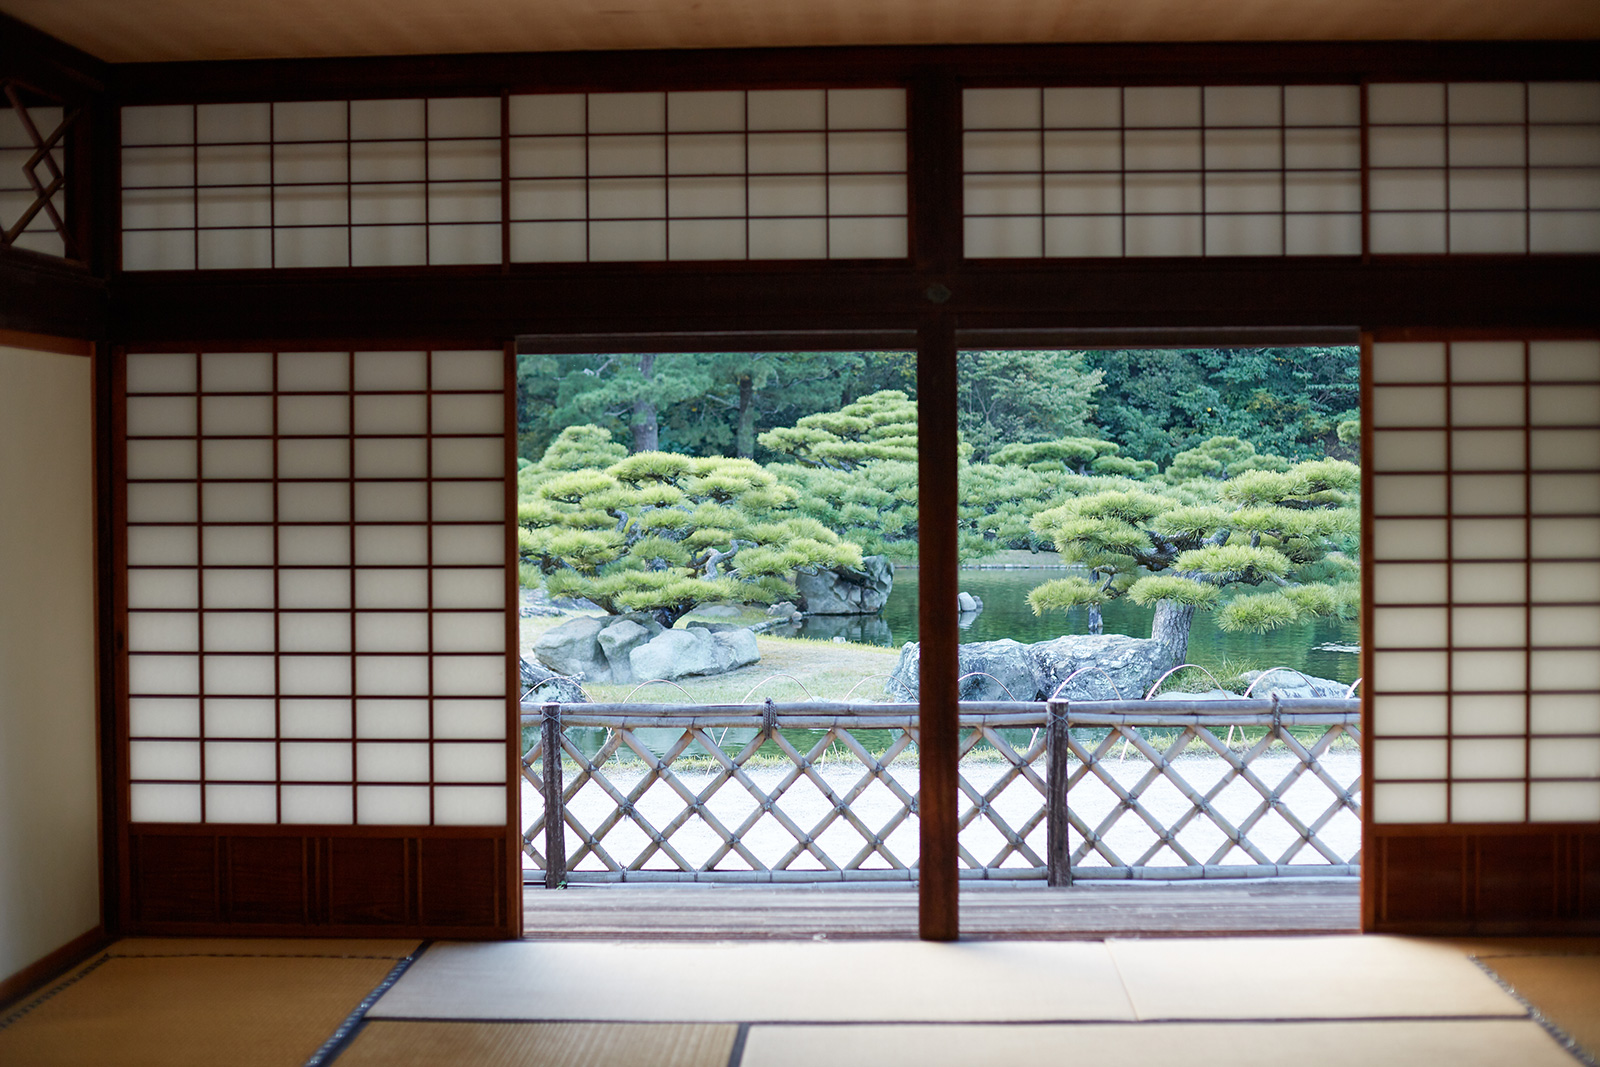 Japan’s Ritsurin Garden offers a taste of timeless beauty at its Kikugetsutei teahouse